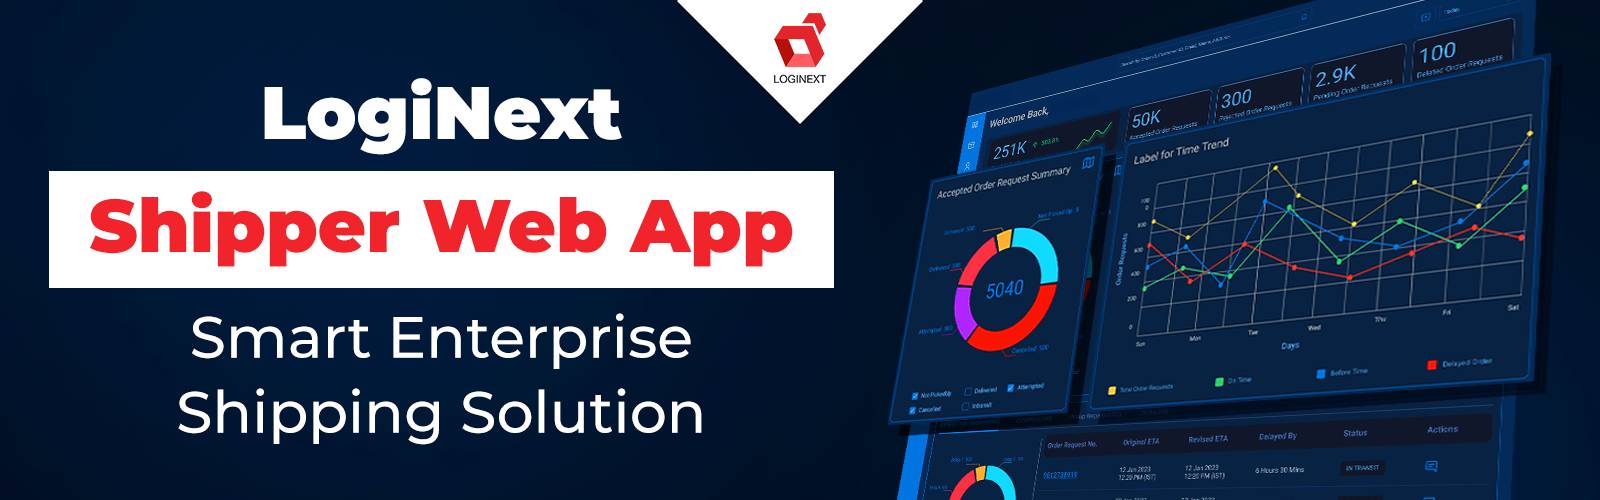 LogiNext Shipper Web App - En iyi Shipper Web Uygulaması